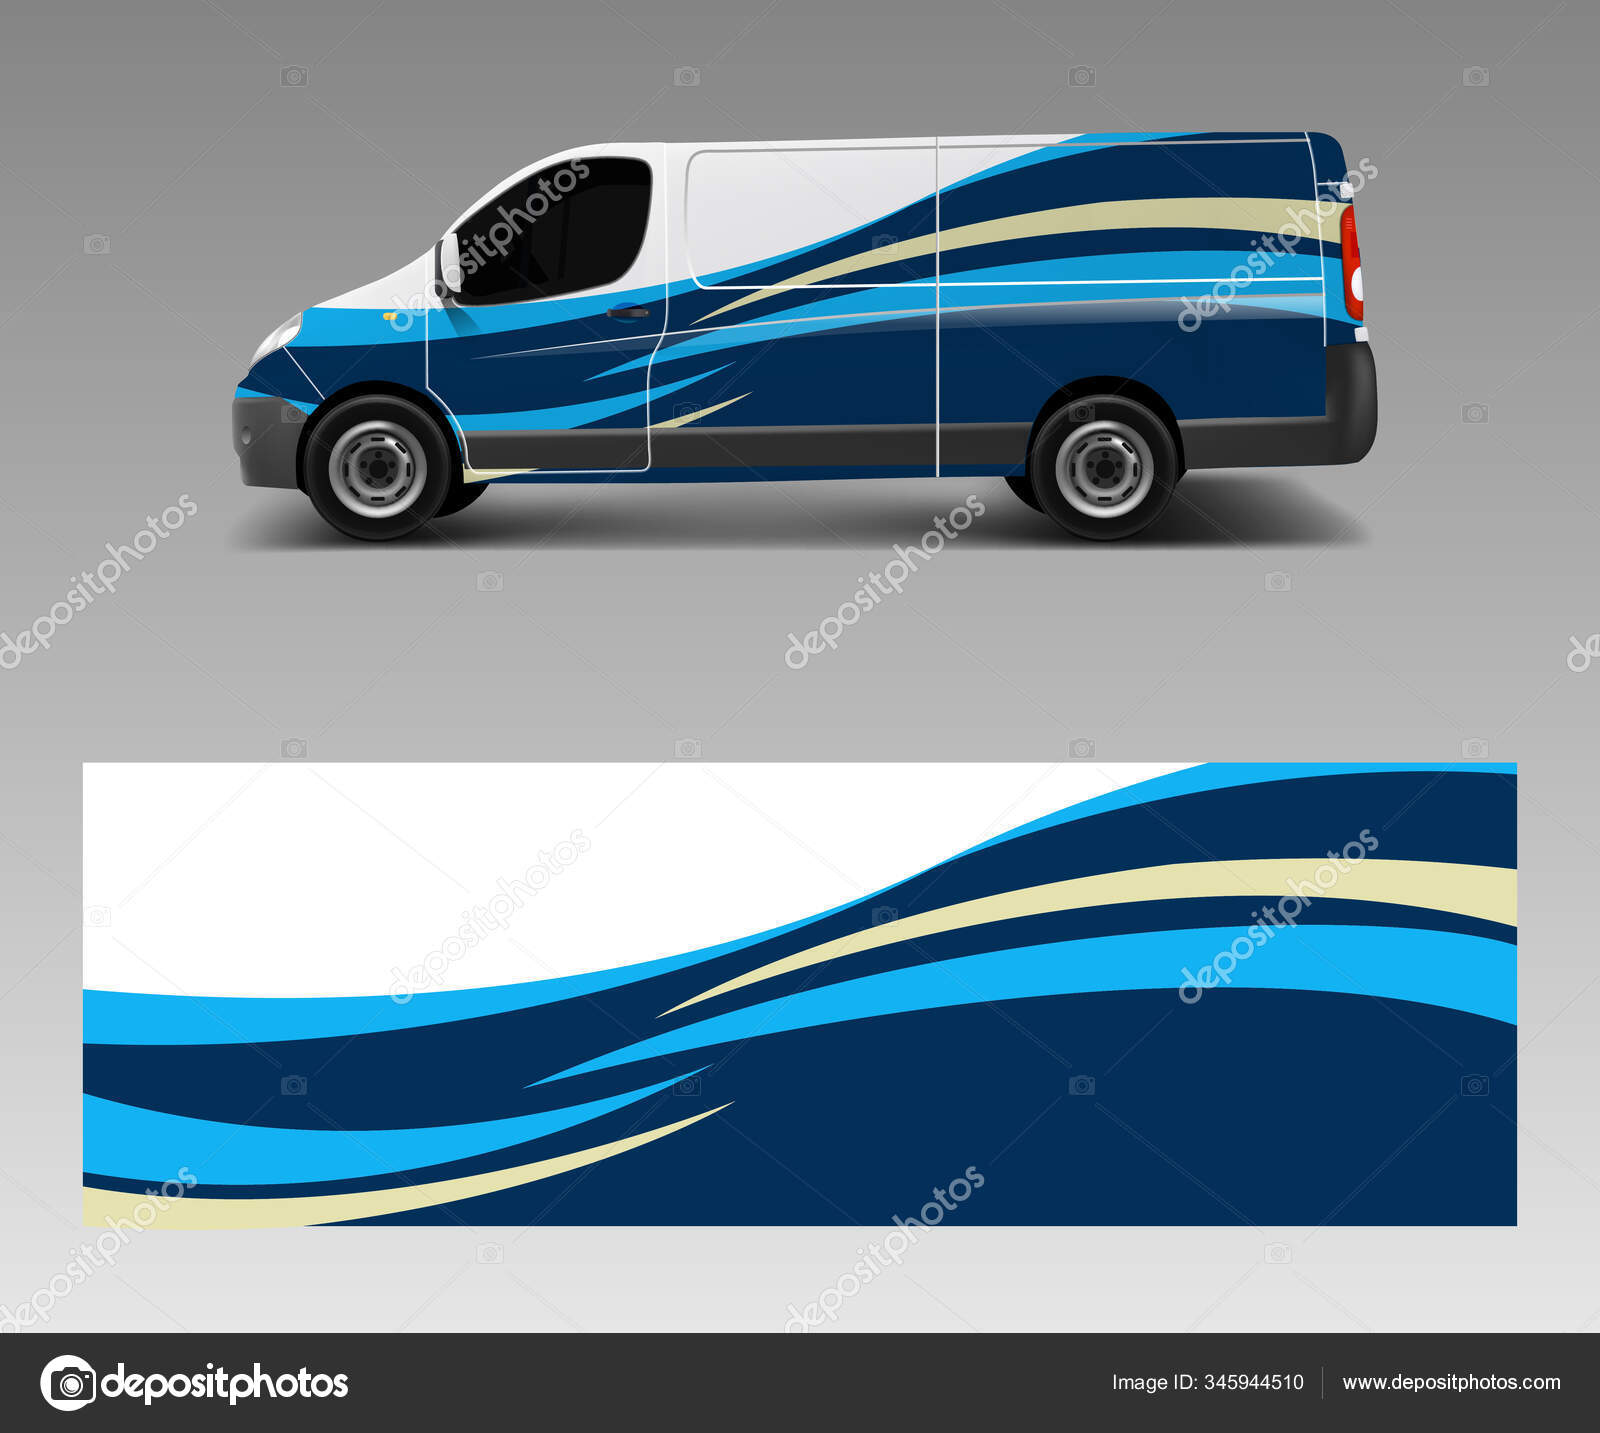 van-wrap-design-template-vector-wave-shapes-decal-wrap-sticker-stock